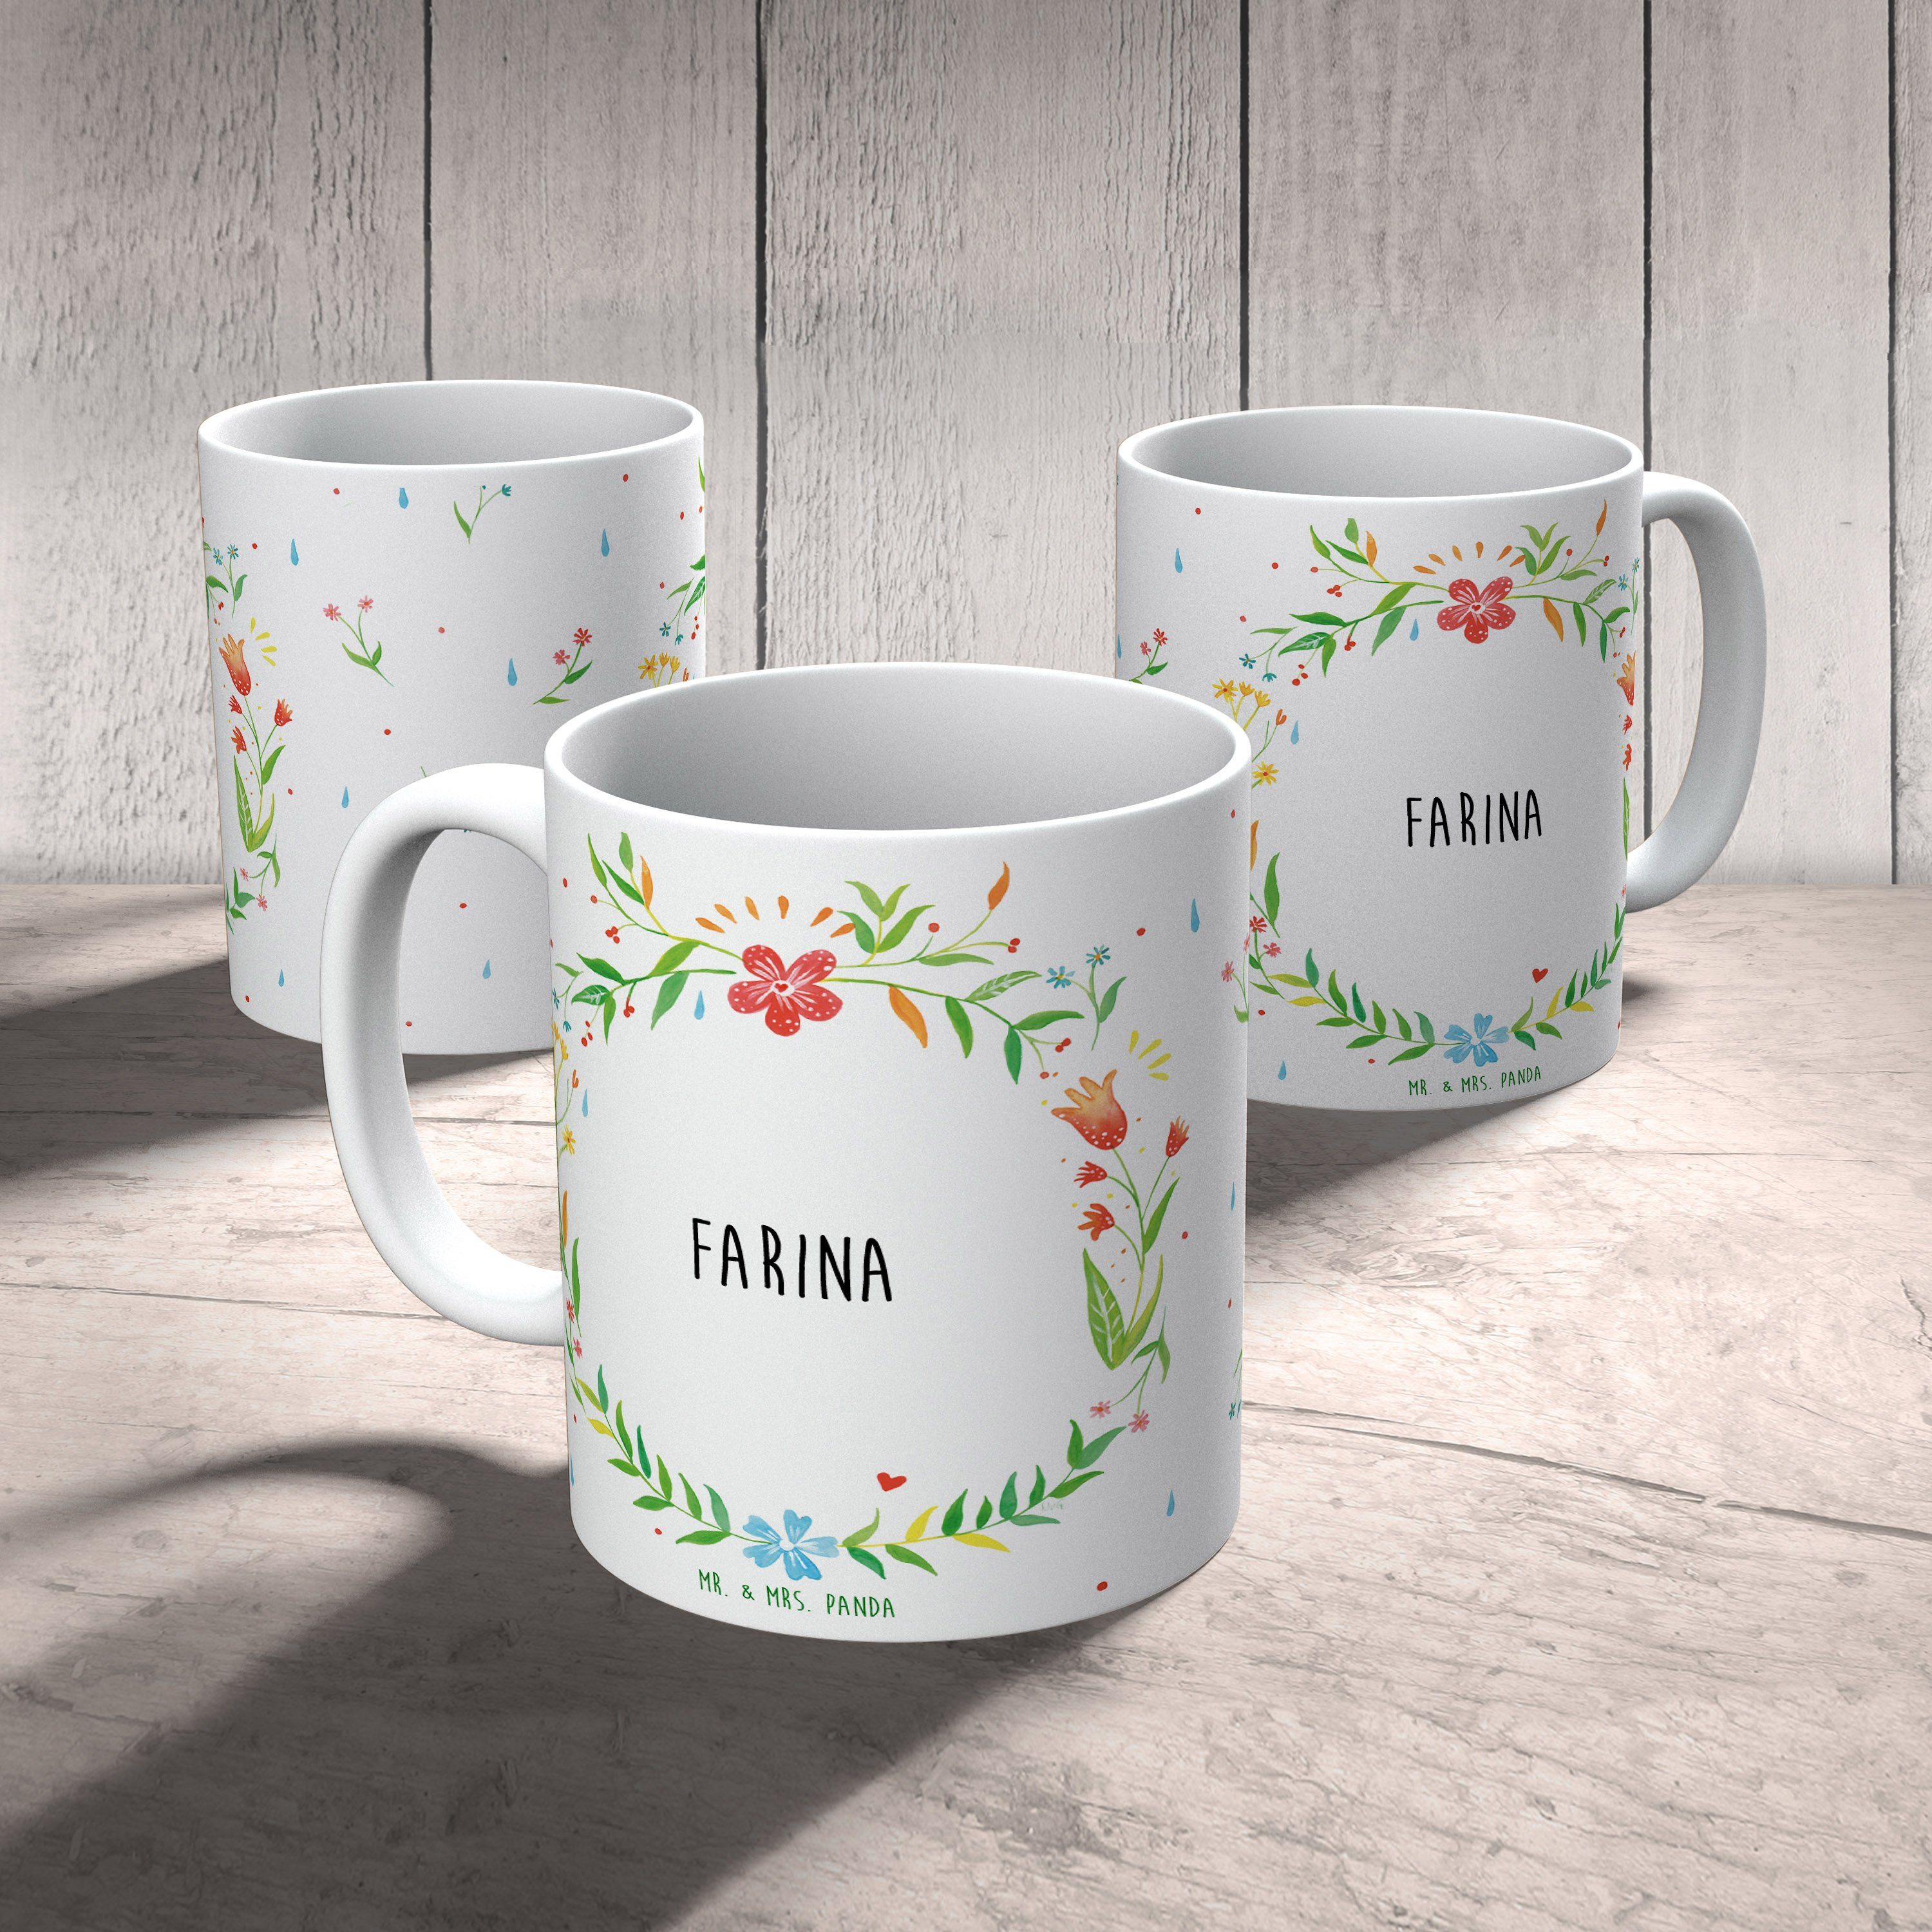 Mr. & Mrs. Panda - Keramik Geschenk, Geschenk Tasse Teetasse, Motive, Farina Büro Tasse, Tasse Tasse